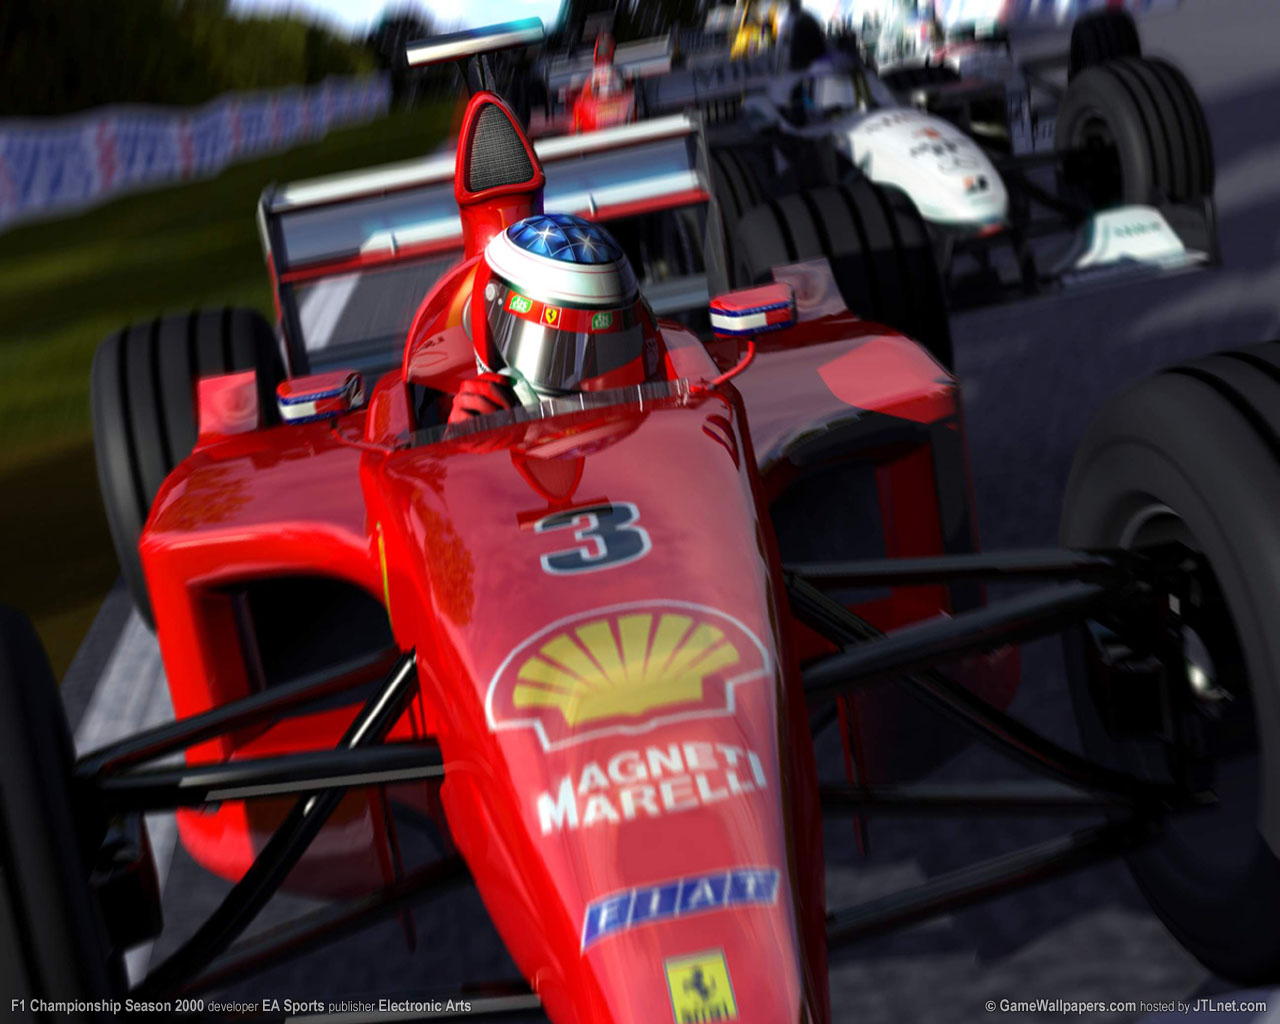 F1 Championship Season 2000 wallpaper 02 1280x1024